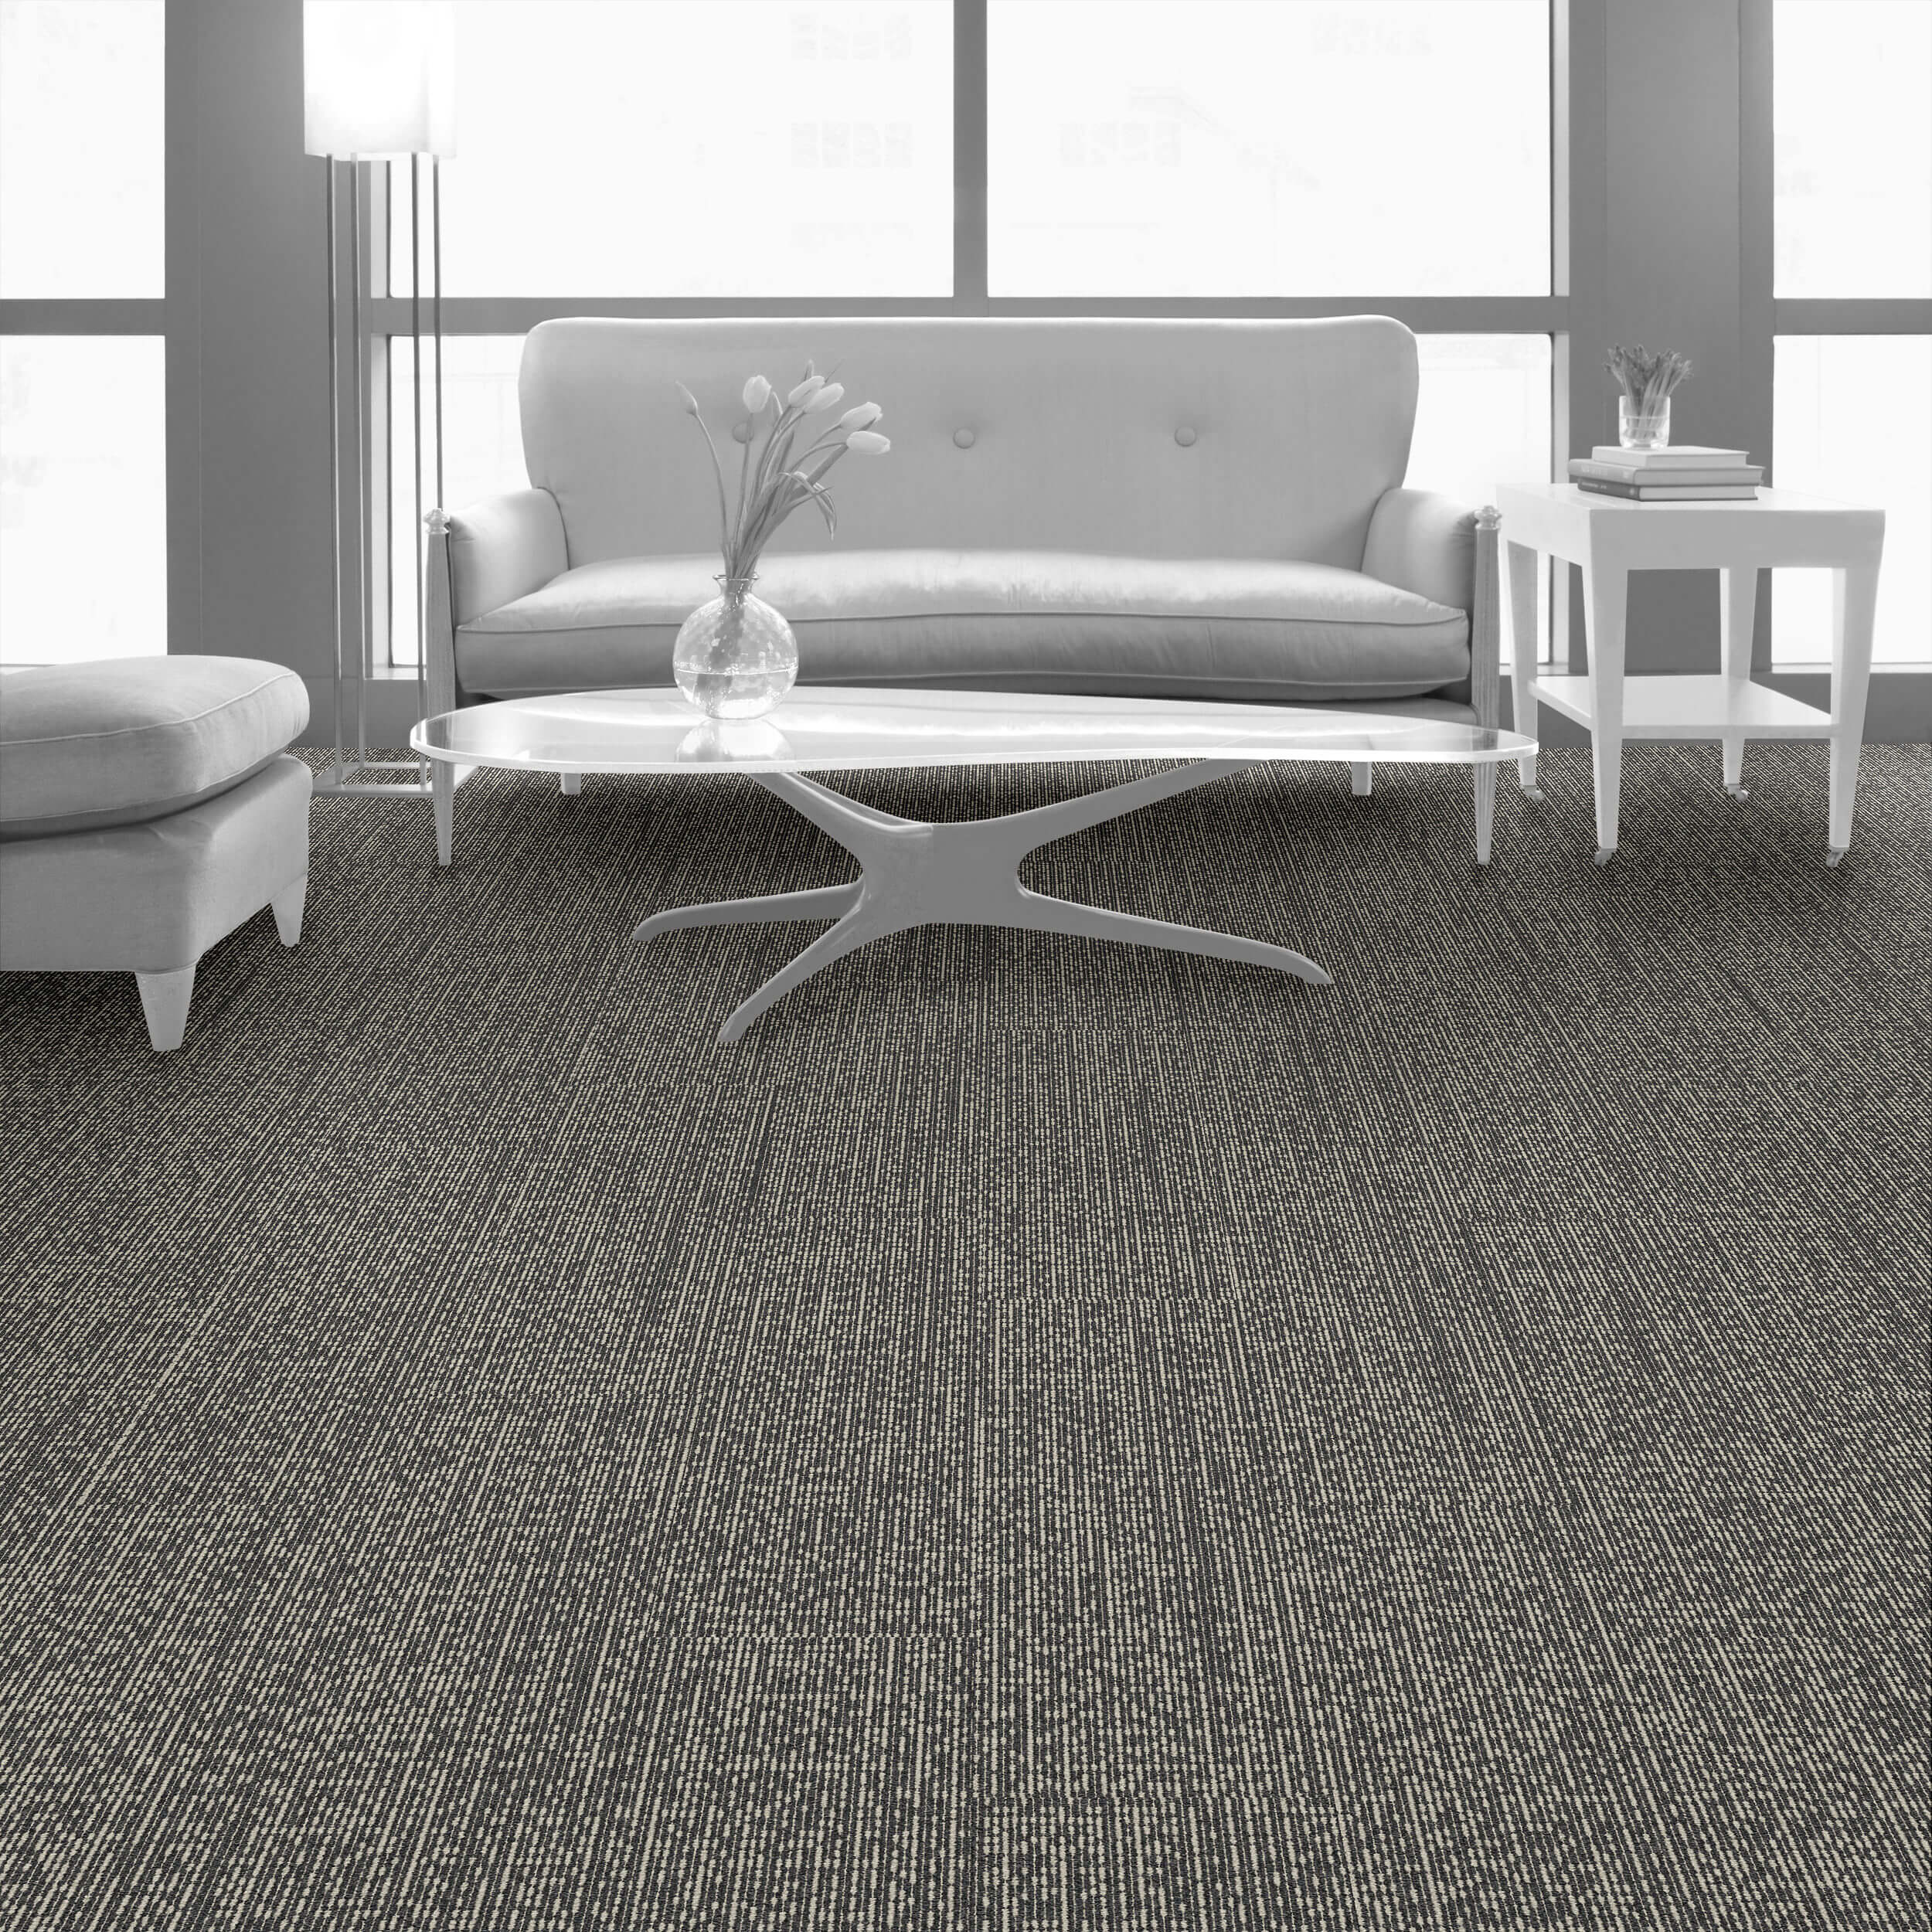 Interface Embodied Beauty - Sashiko Stitch Carpet Planks